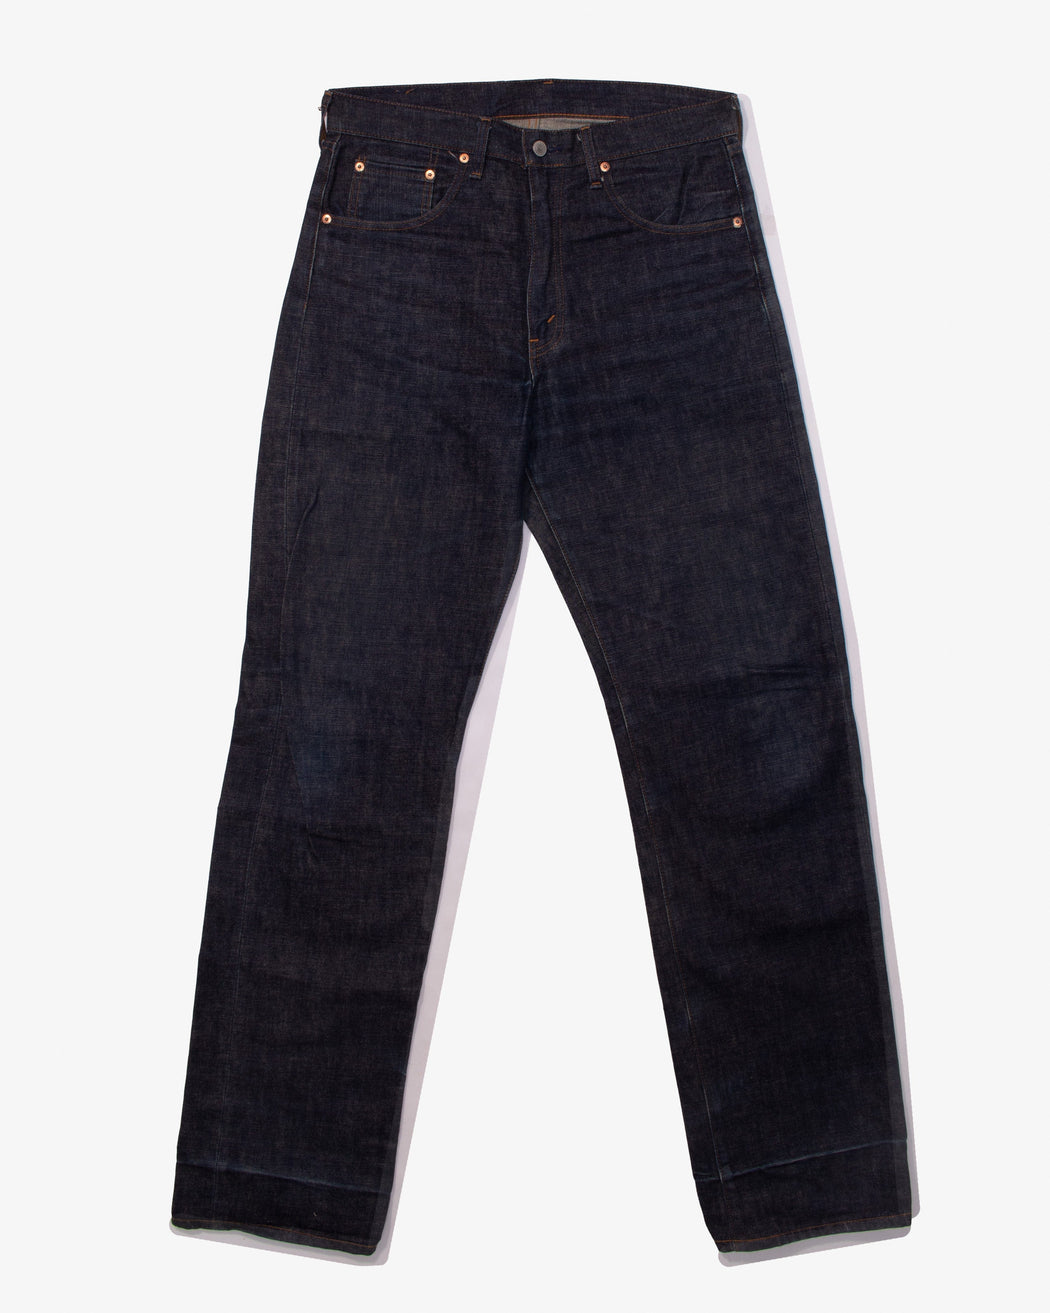 Japanese Repro Denim Jeans, Levi Strauss & Co. Brand, Selvedge Denim - —  Kiriko Made